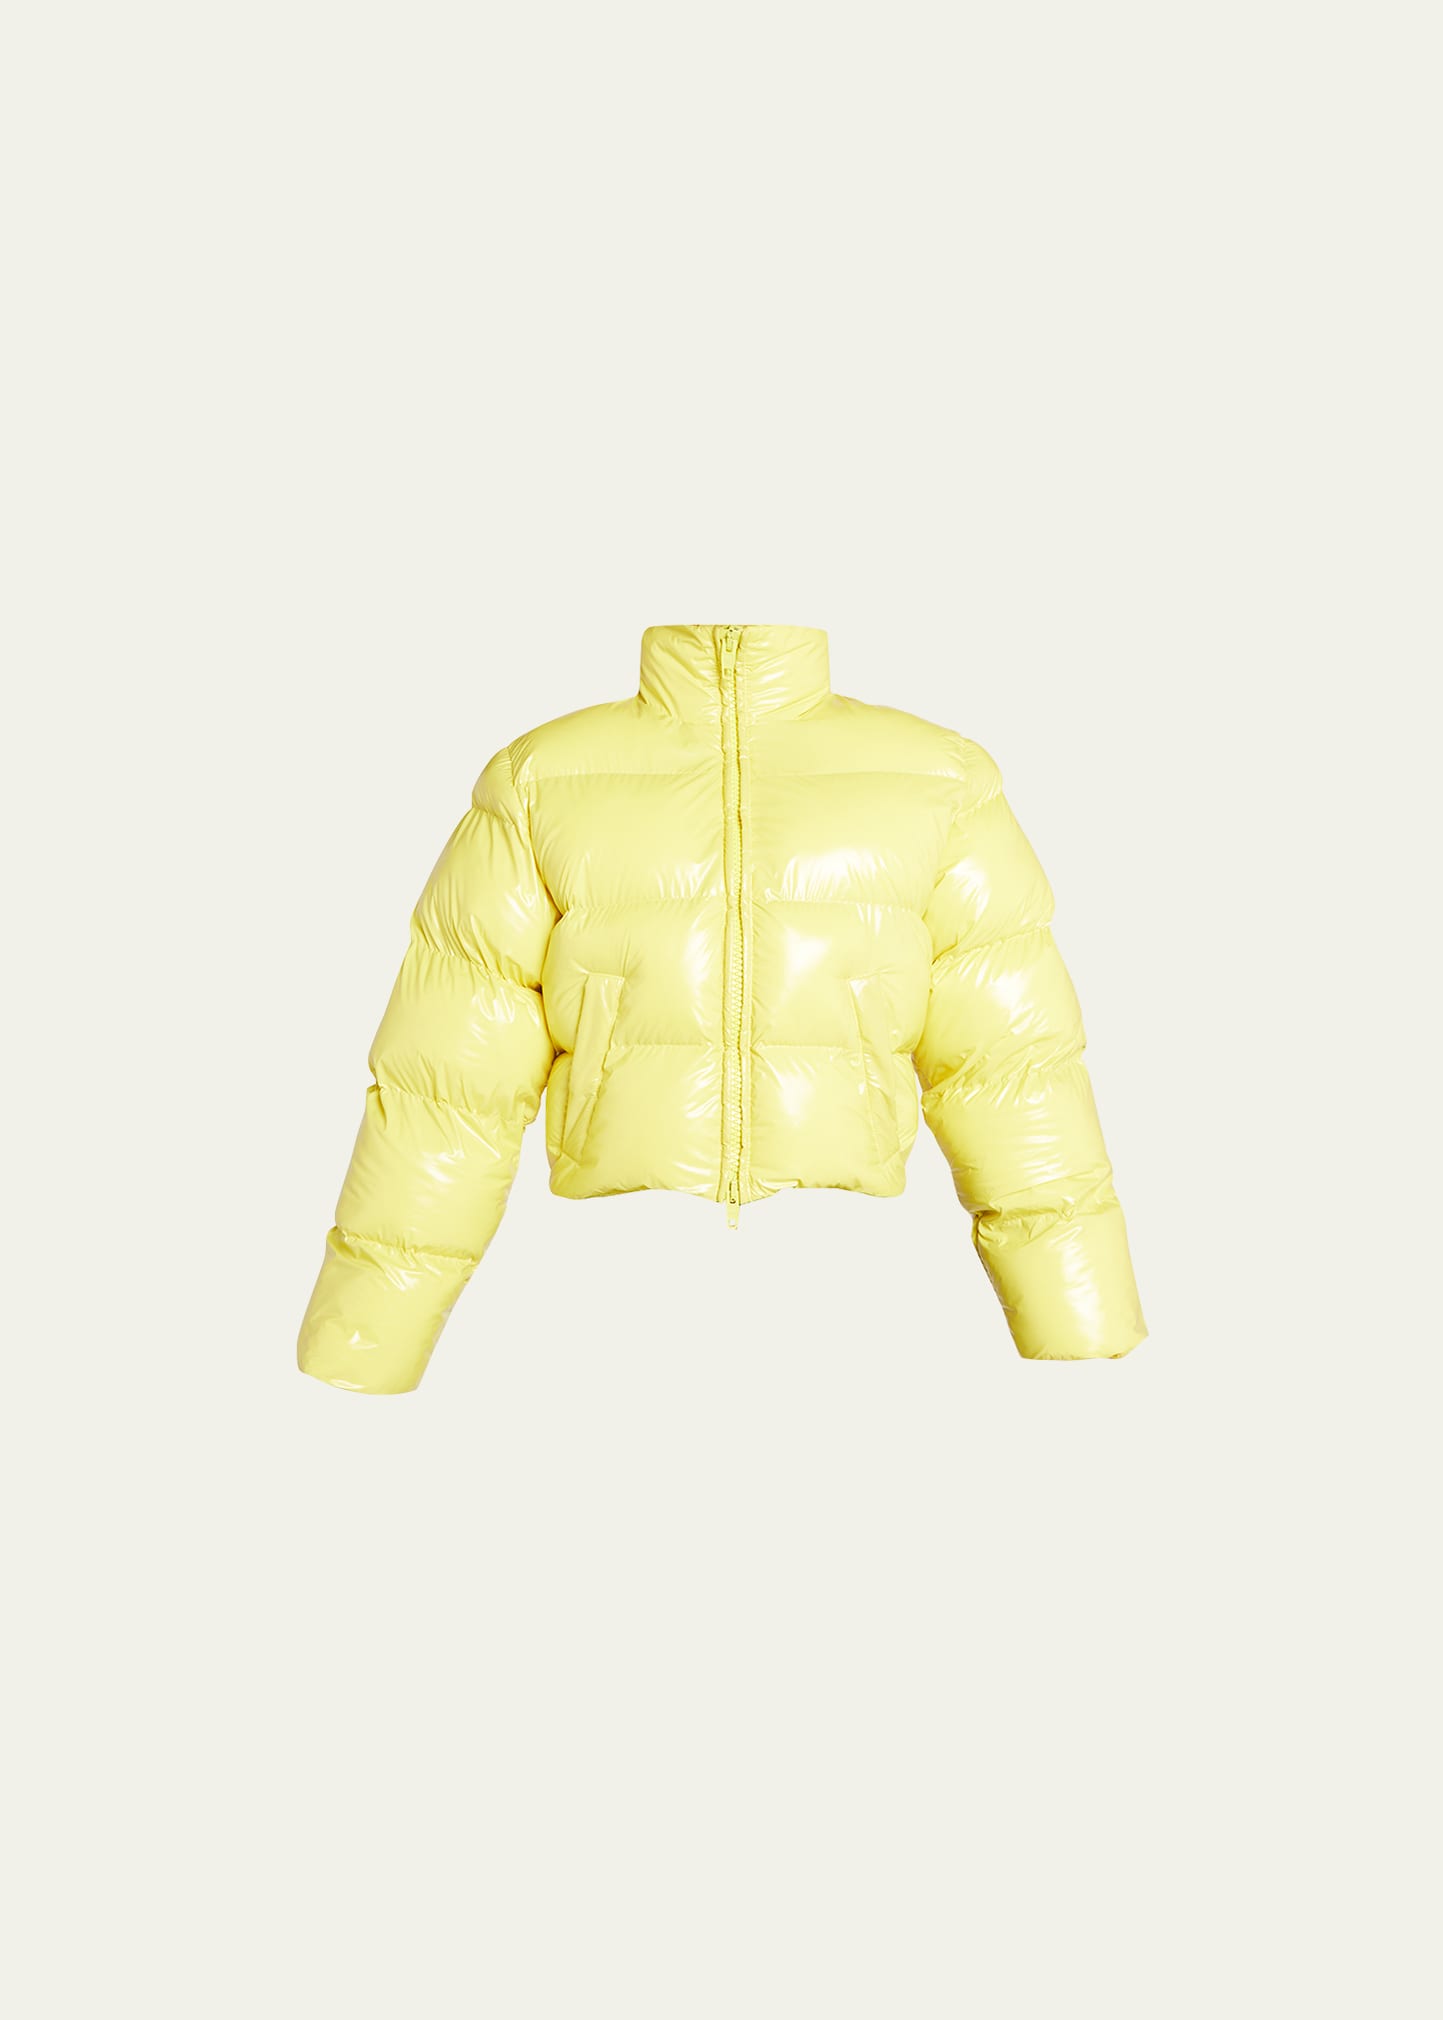 Balenciaga Inflatable Jacket in Yellow